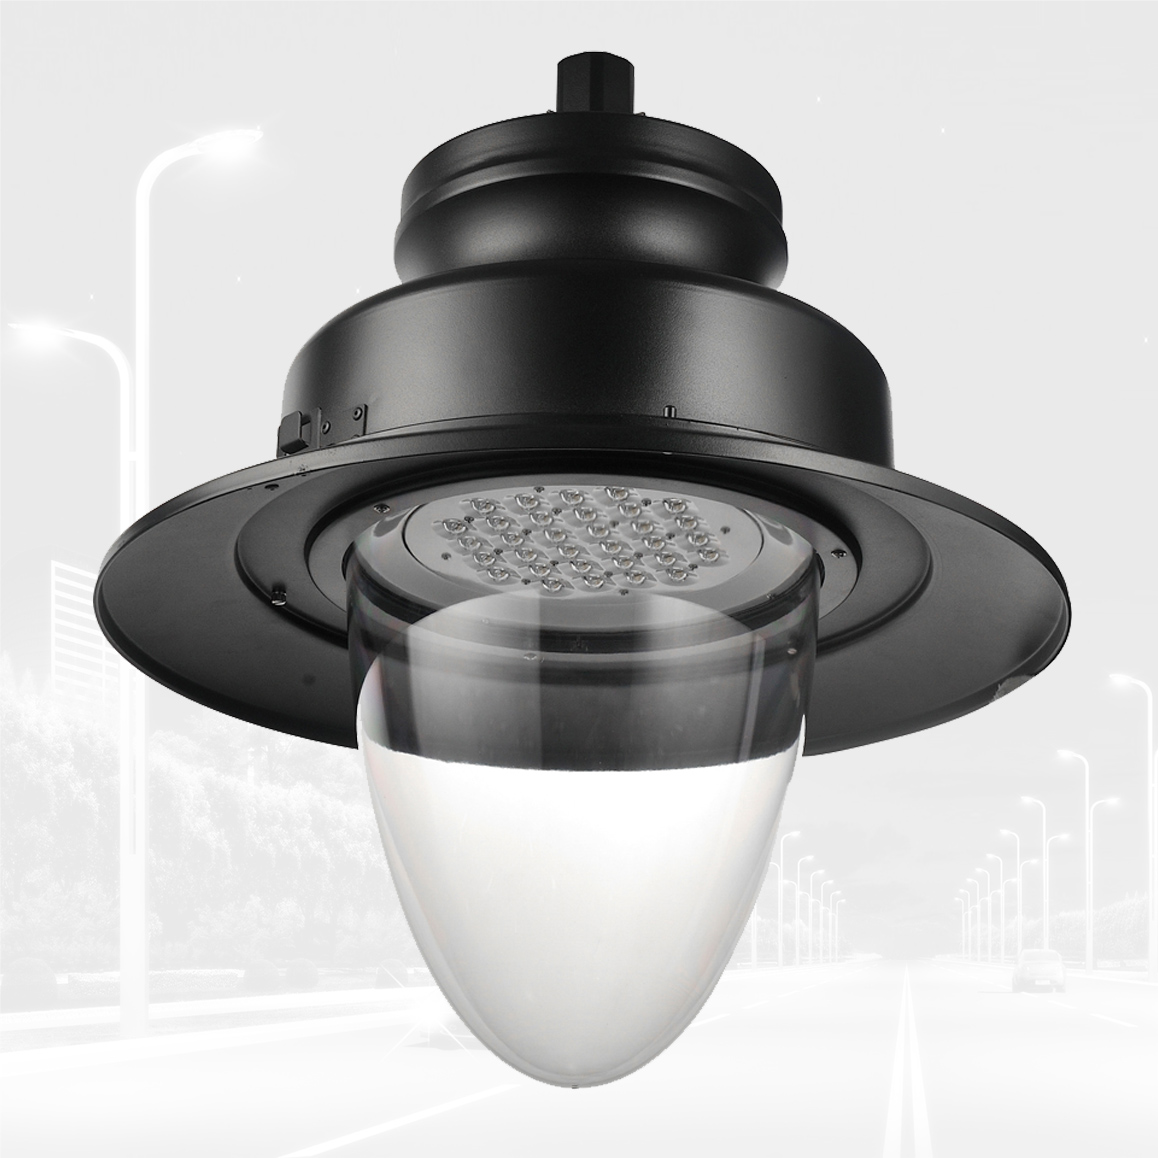 YMLED-6139 Classical design IP65 waterproof 30w-70w Outdoor LED garden lamp fixture